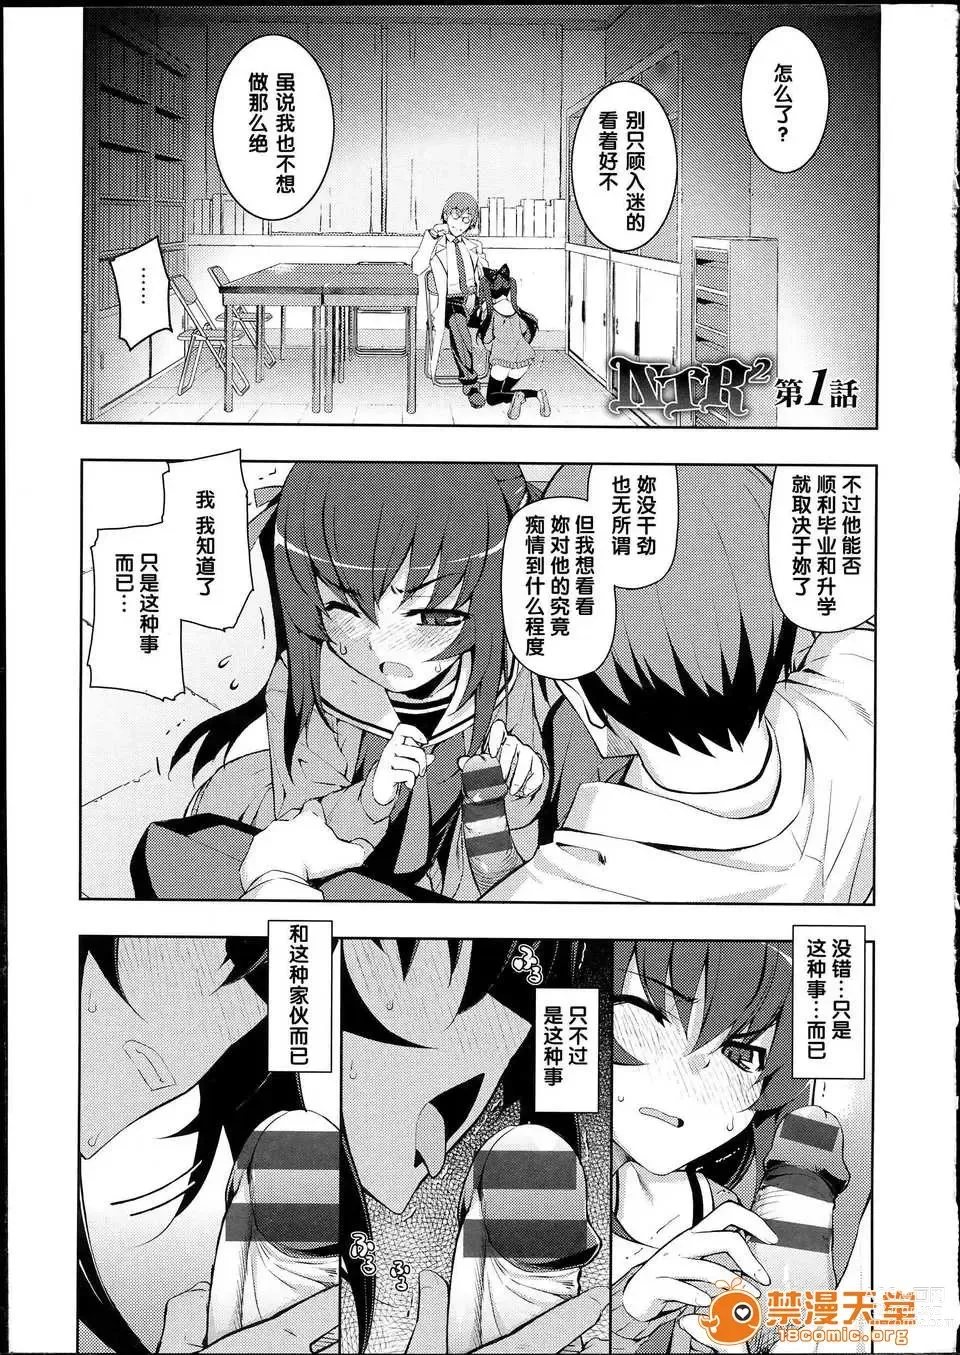 Page 7 of manga NTR2